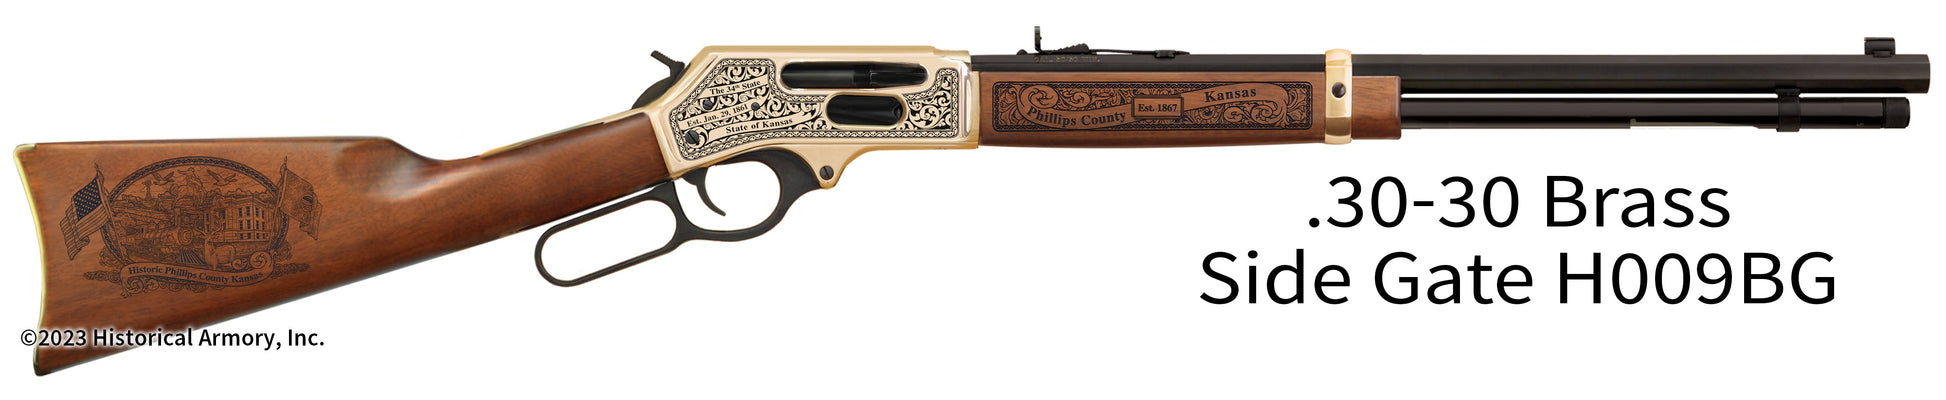 Phillips County Kansas Engraved Henry .30-30 Brass Side Gate Rifle